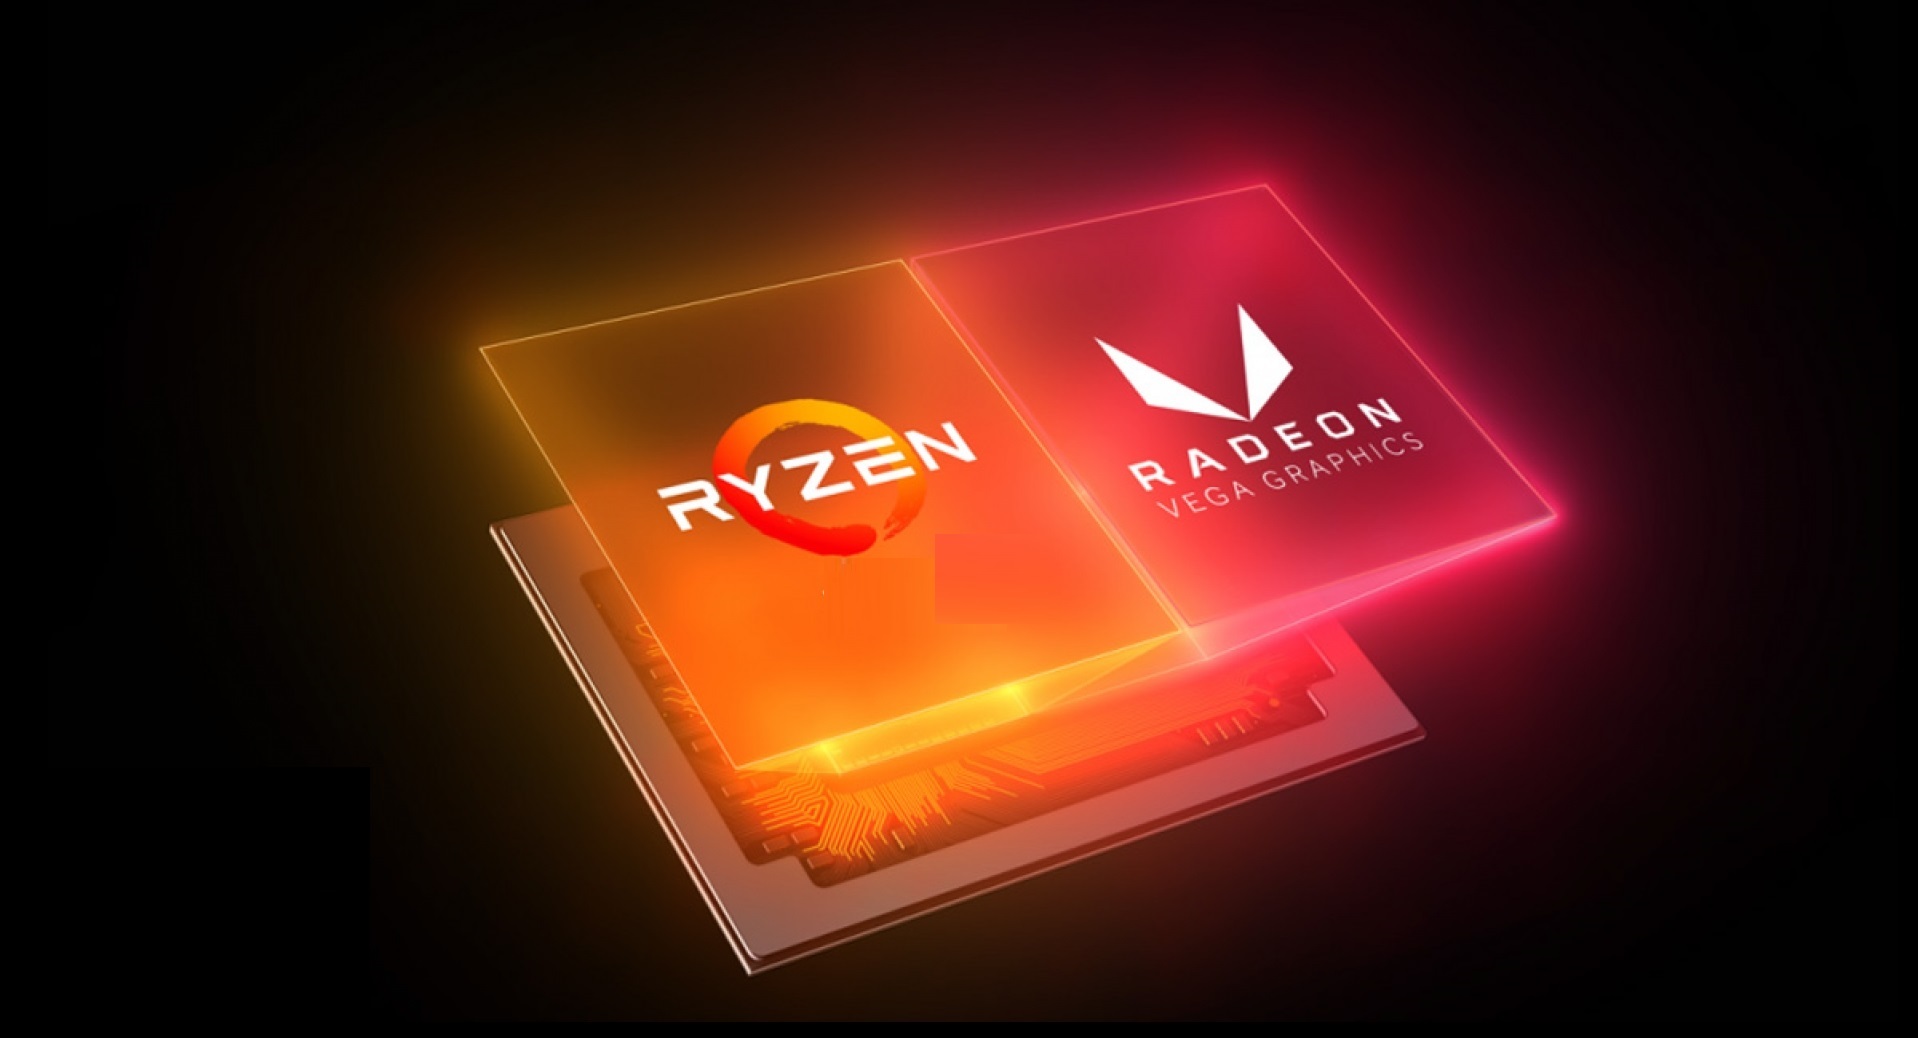 AMD Radeon Software Adrenalin 19.7.3